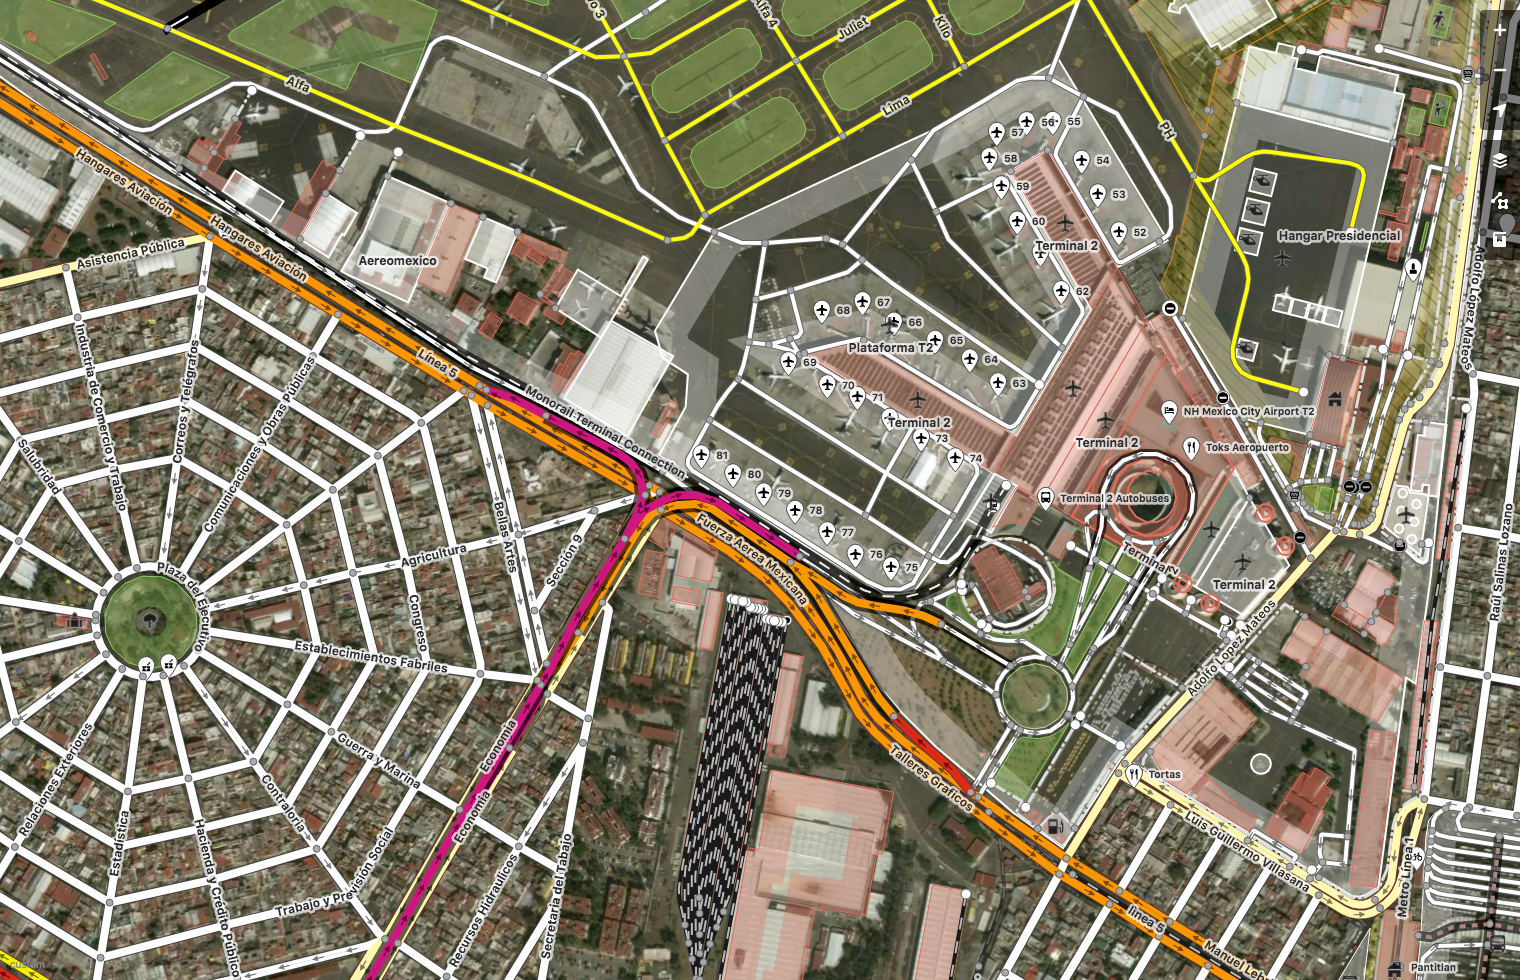 DigitalGlobe satellite imagery launch for OpenStreetMap